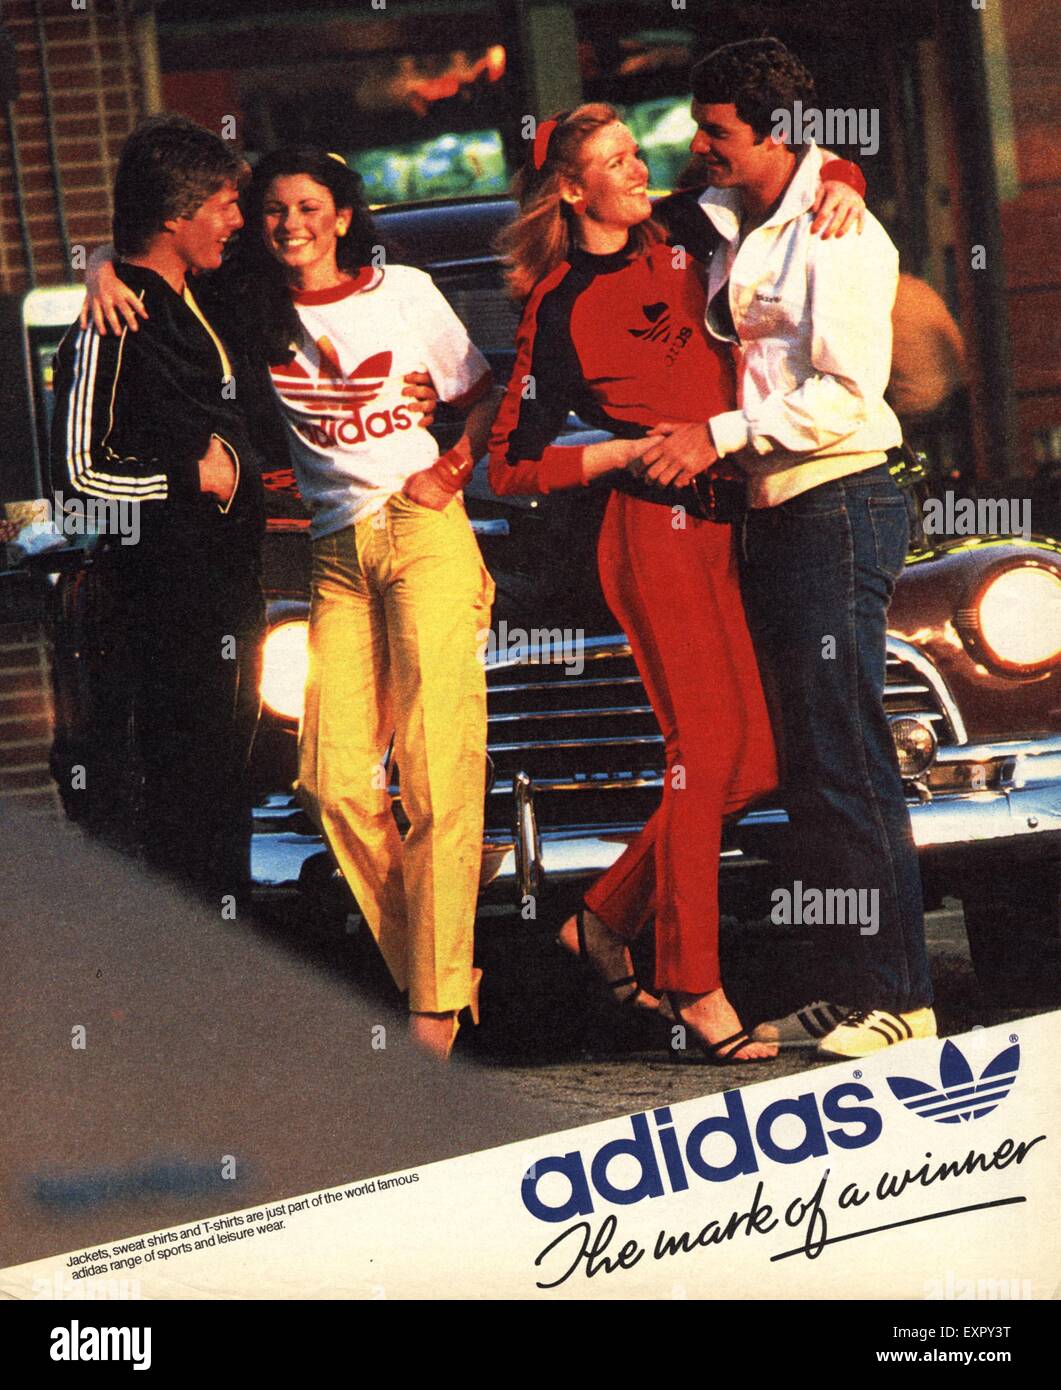 1980's adidas